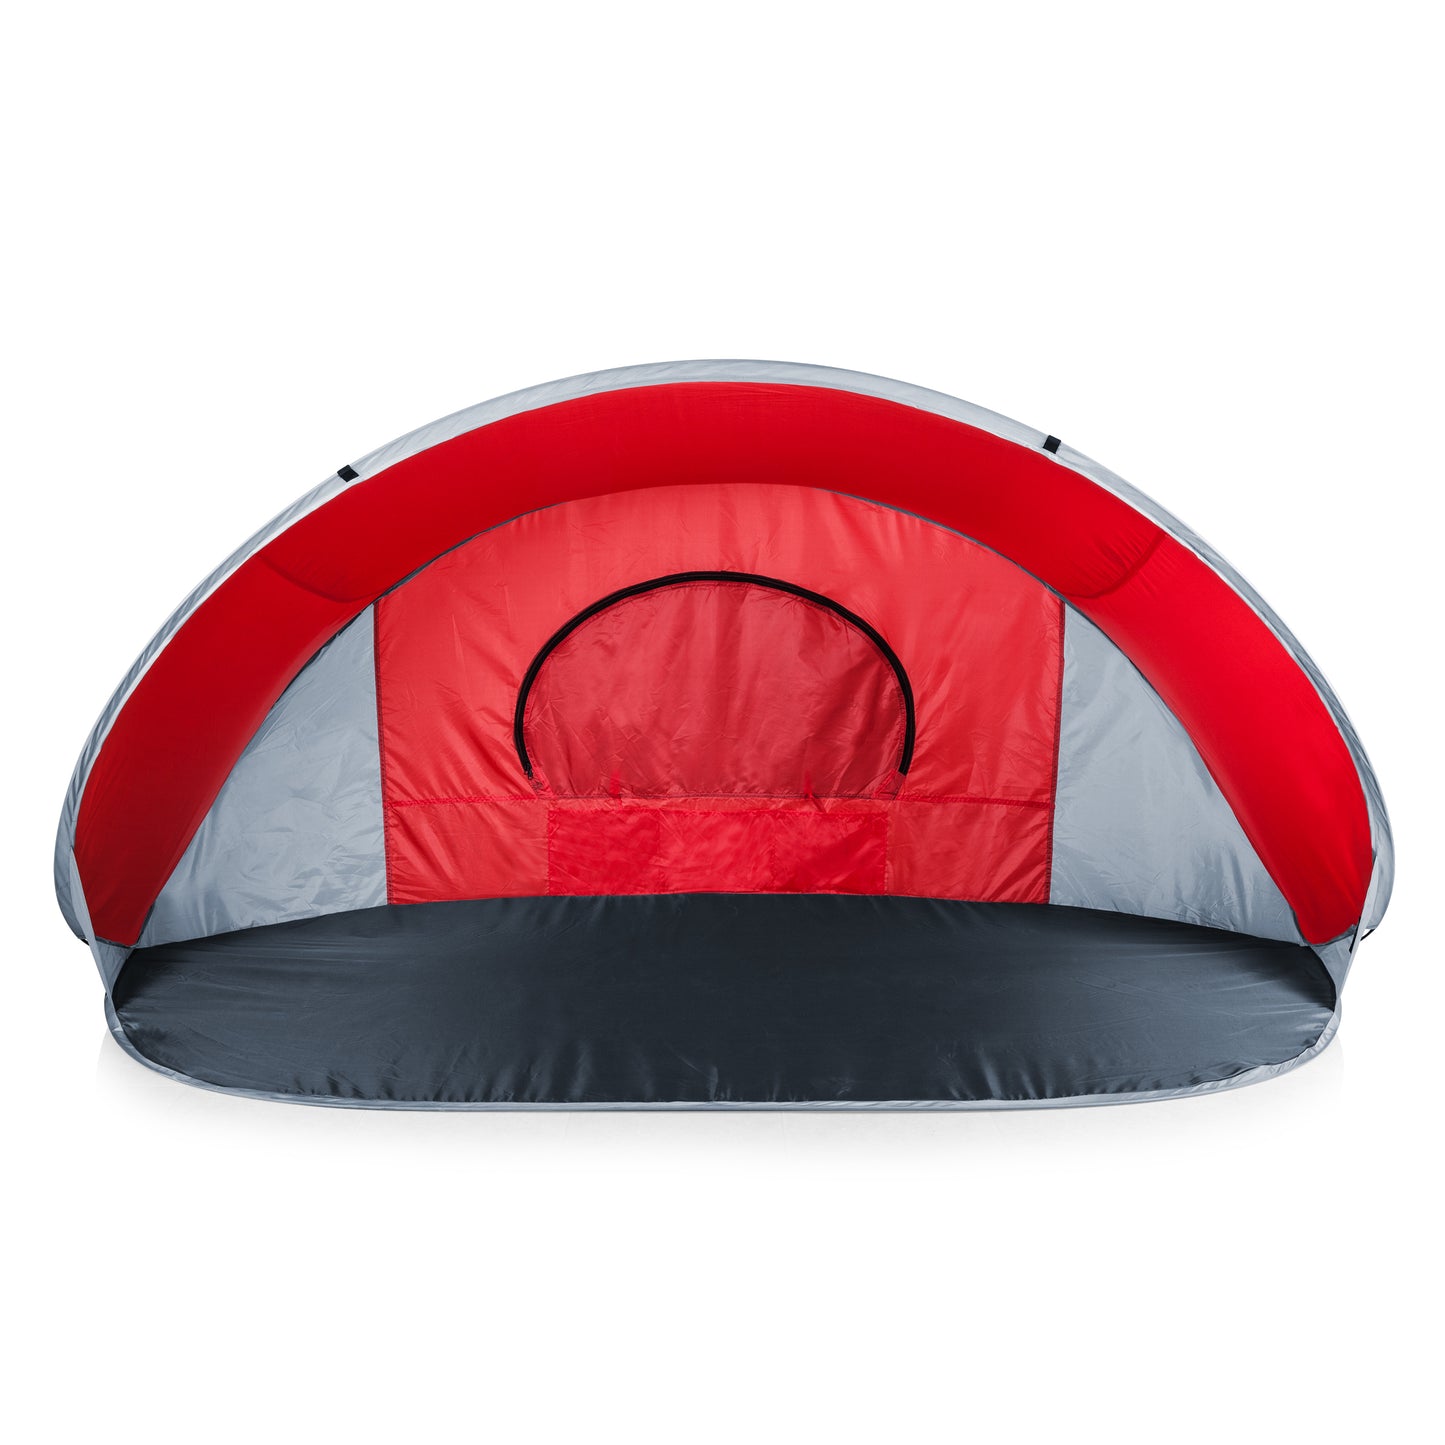 Kansas City Chiefs - Manta Portable Beach Tent